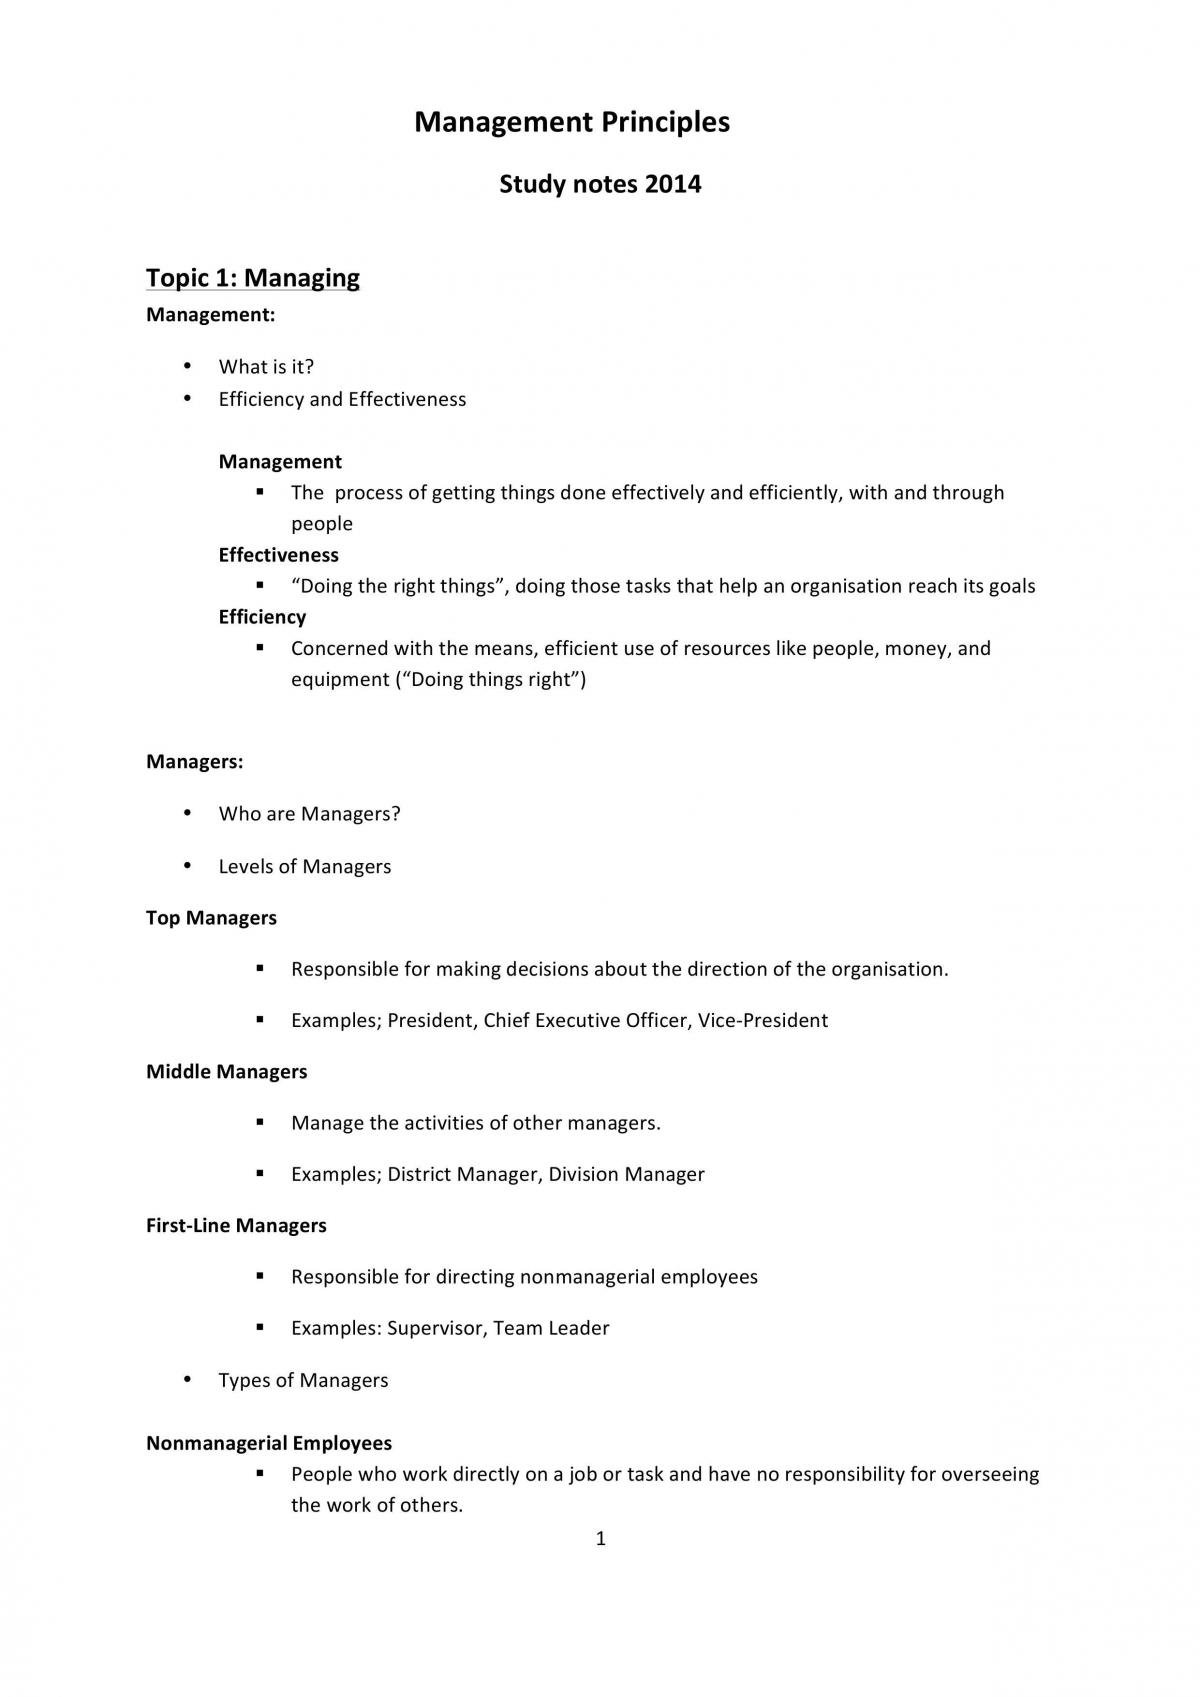 Management Principles Study notes  - Page 1